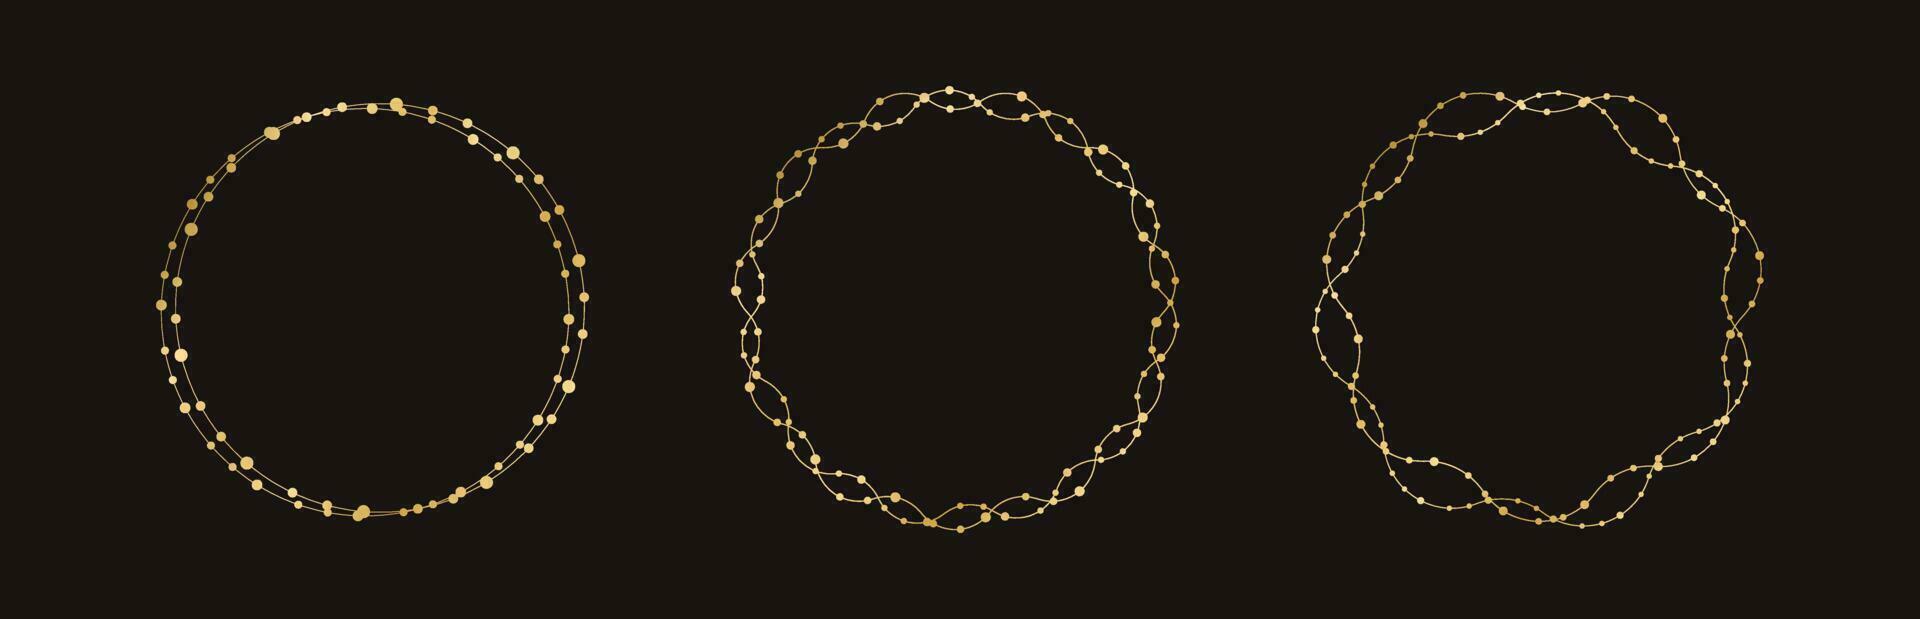 goud ronde Kerstmis fee lichten kader grens set. abstract gouden dots cirkel kader verzameling. vector